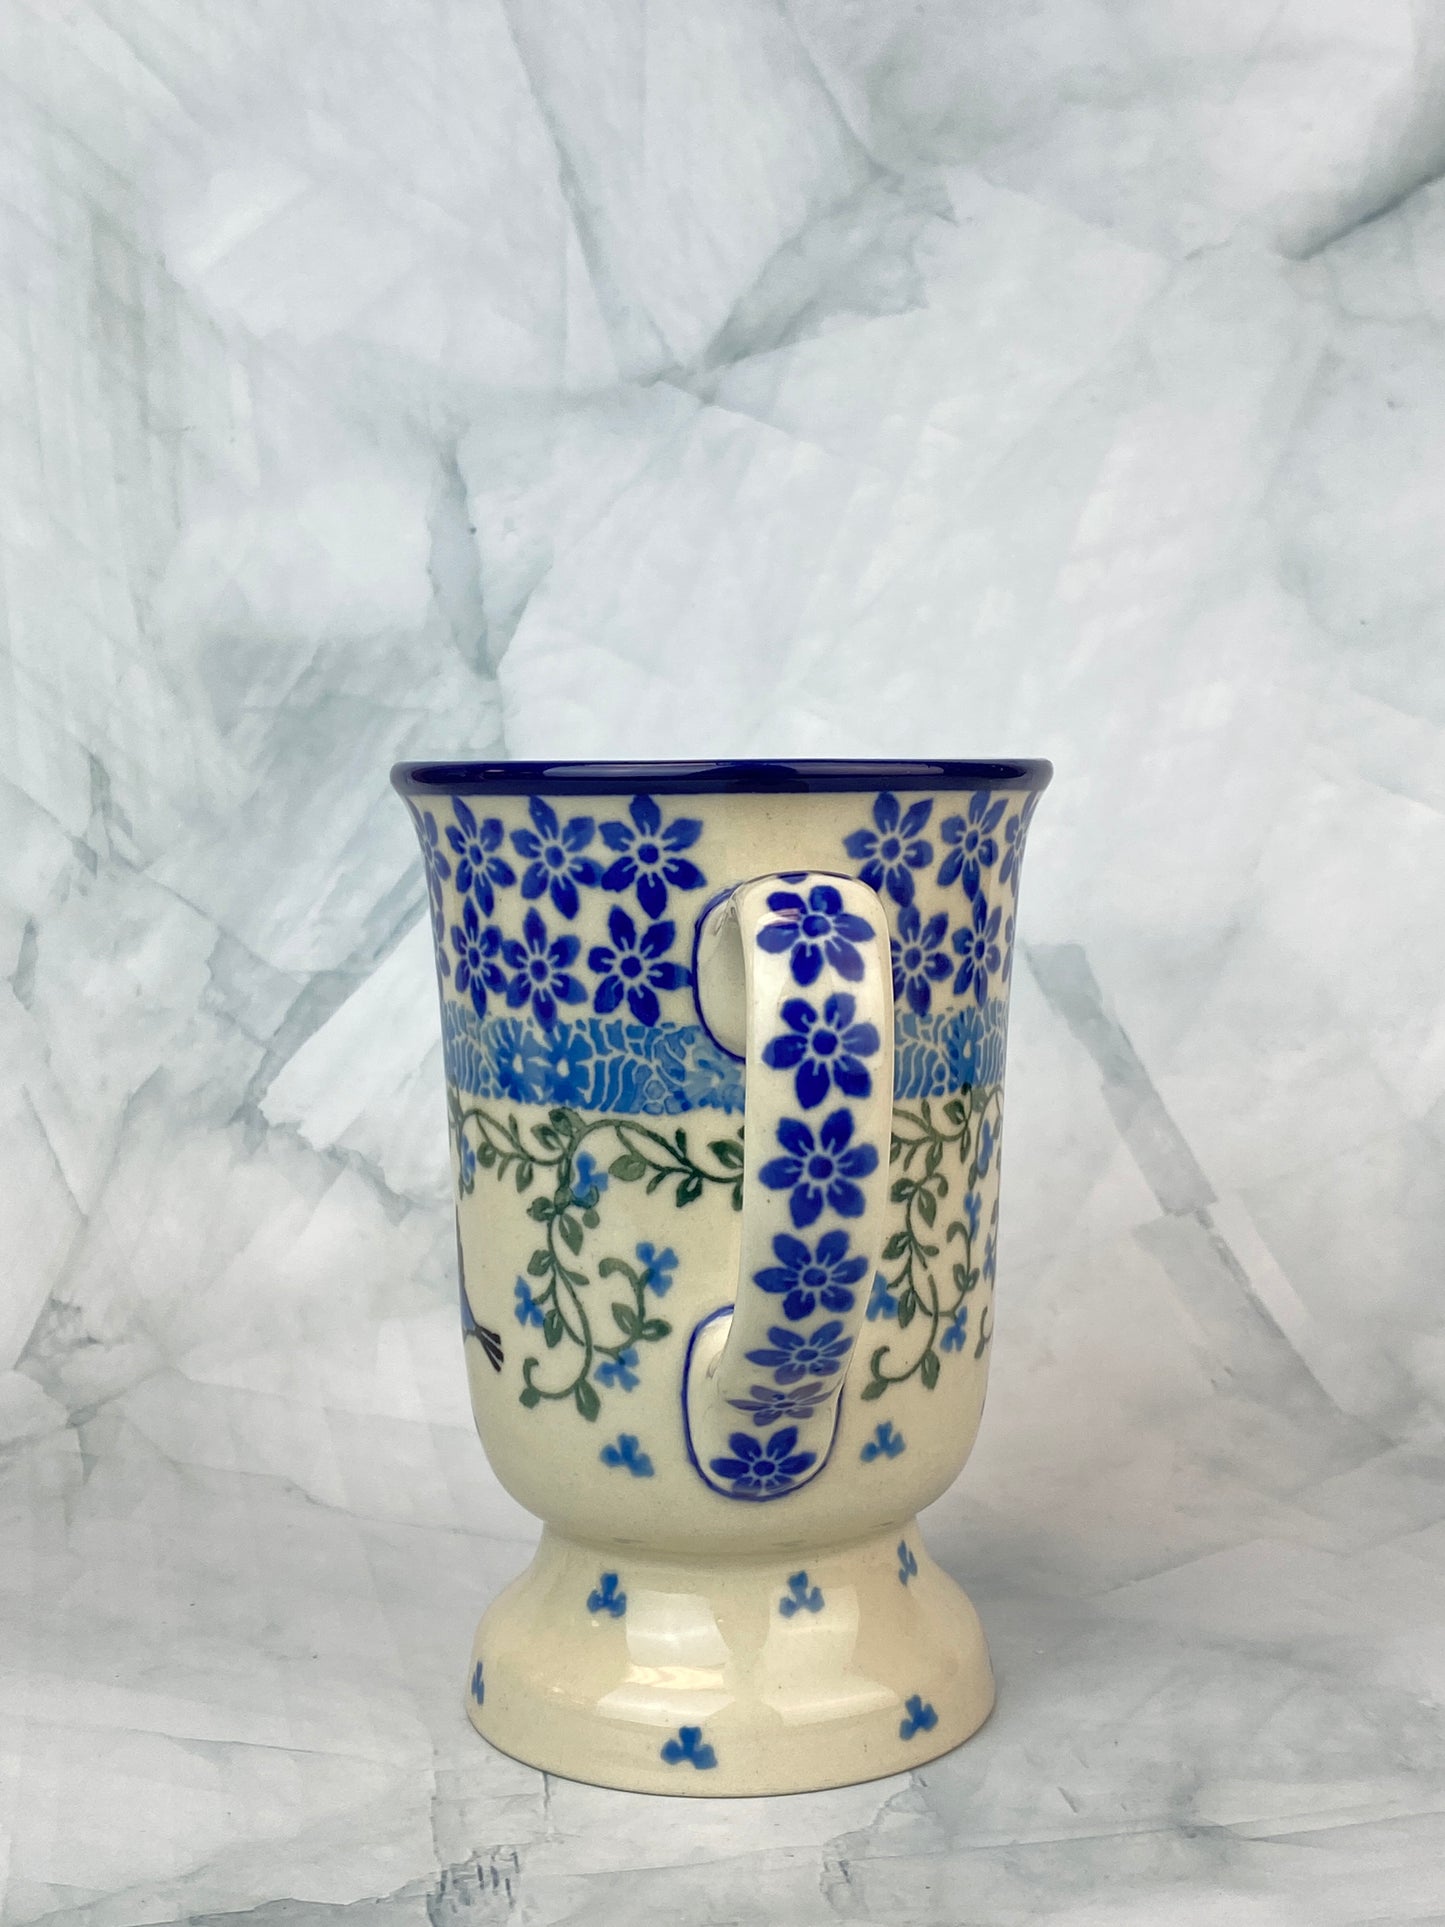 SALE 8oz Pedestal Mug - Shape 243 - Pattern 1933